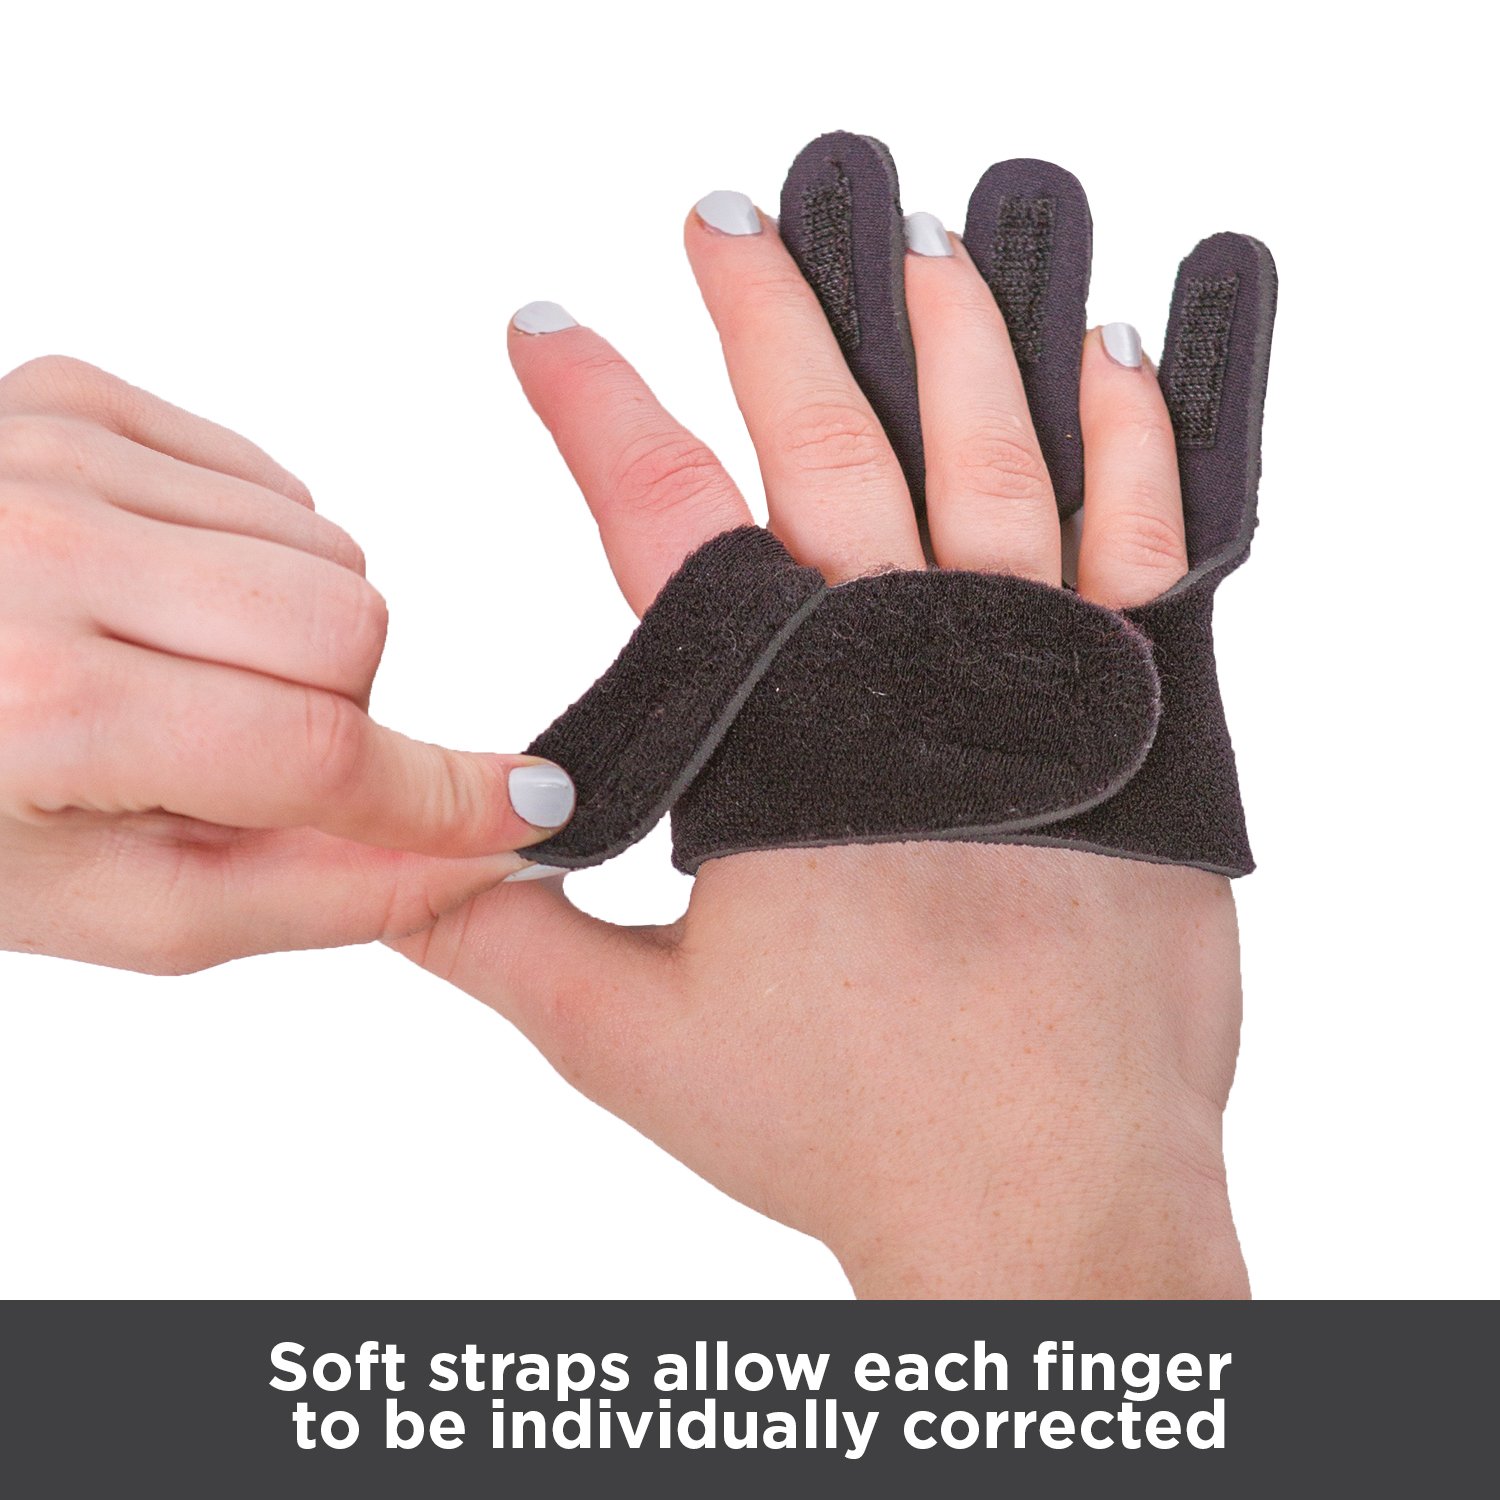 BraceAbility Ulnar Deviation & Drift Hand Splint | MCP Knuckle Joint Support Brace for Rheumatoid Arthritis & Tendonitis Pain Relief, Finger Straightener & Stretcher Glove - L (MED/LGE) Left